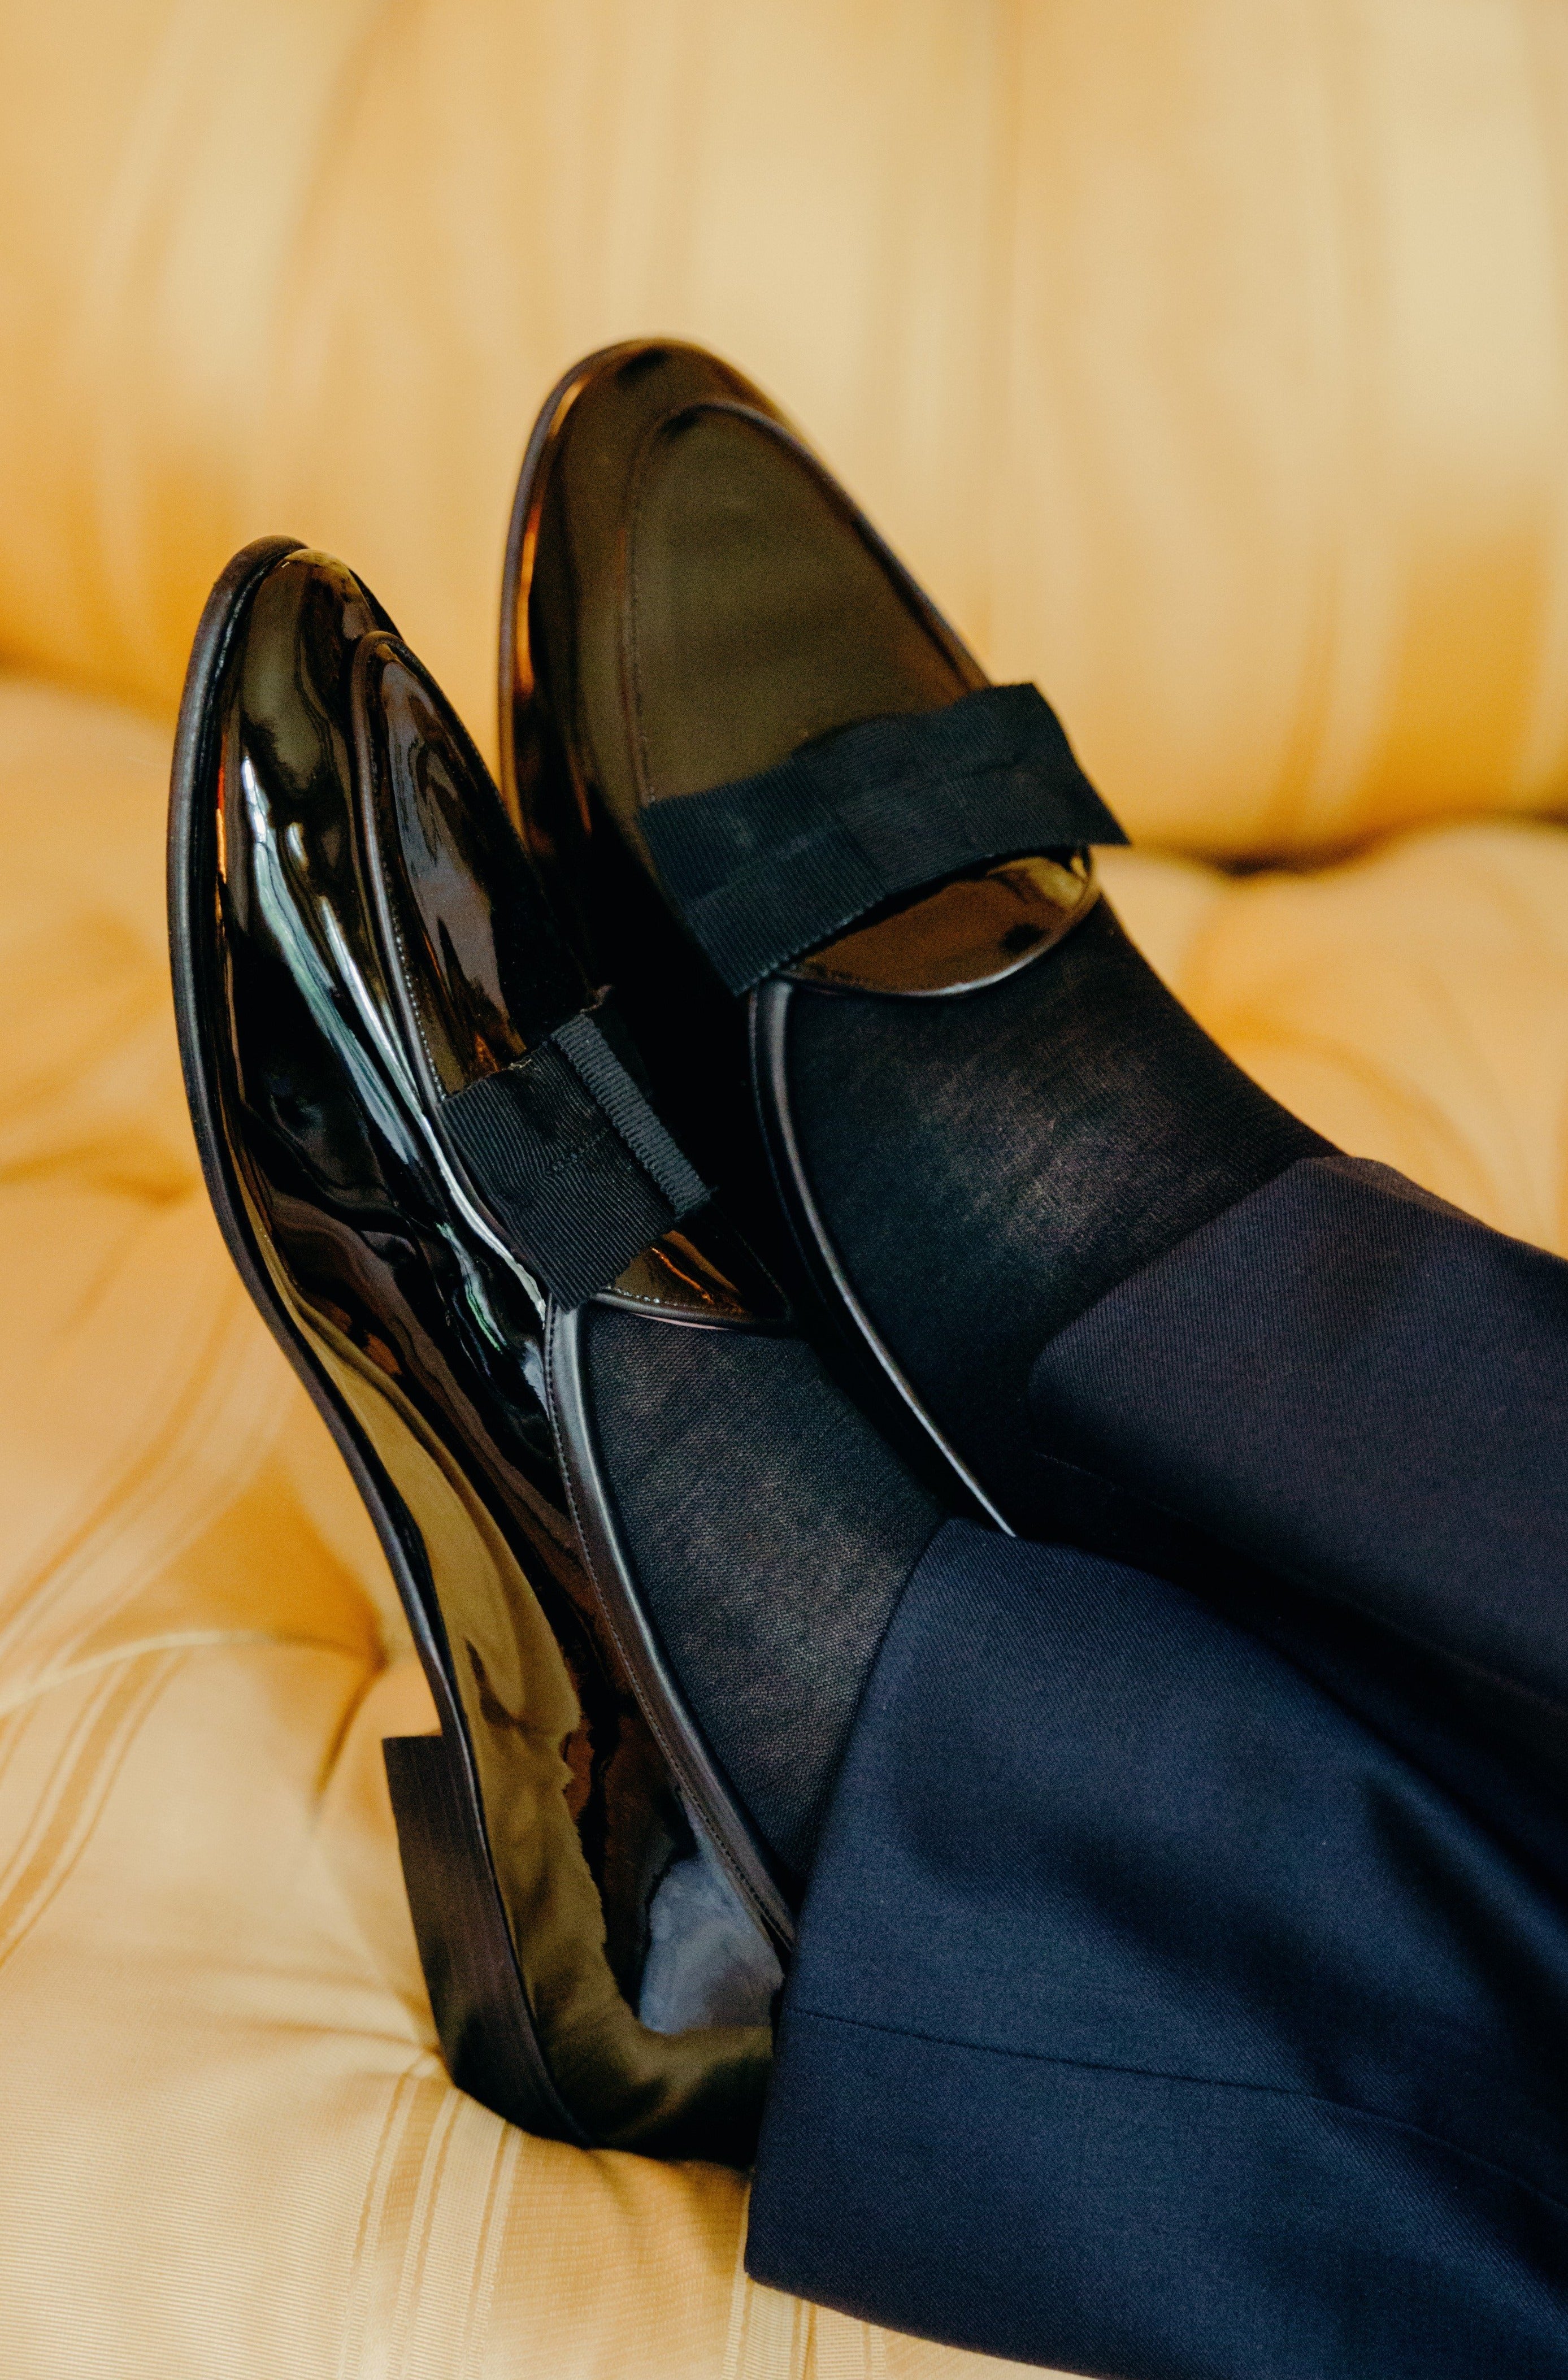 Finest Socks In The World - Over The Calf Black Silk for Black Tie & White  Tie - Fort Belvedere